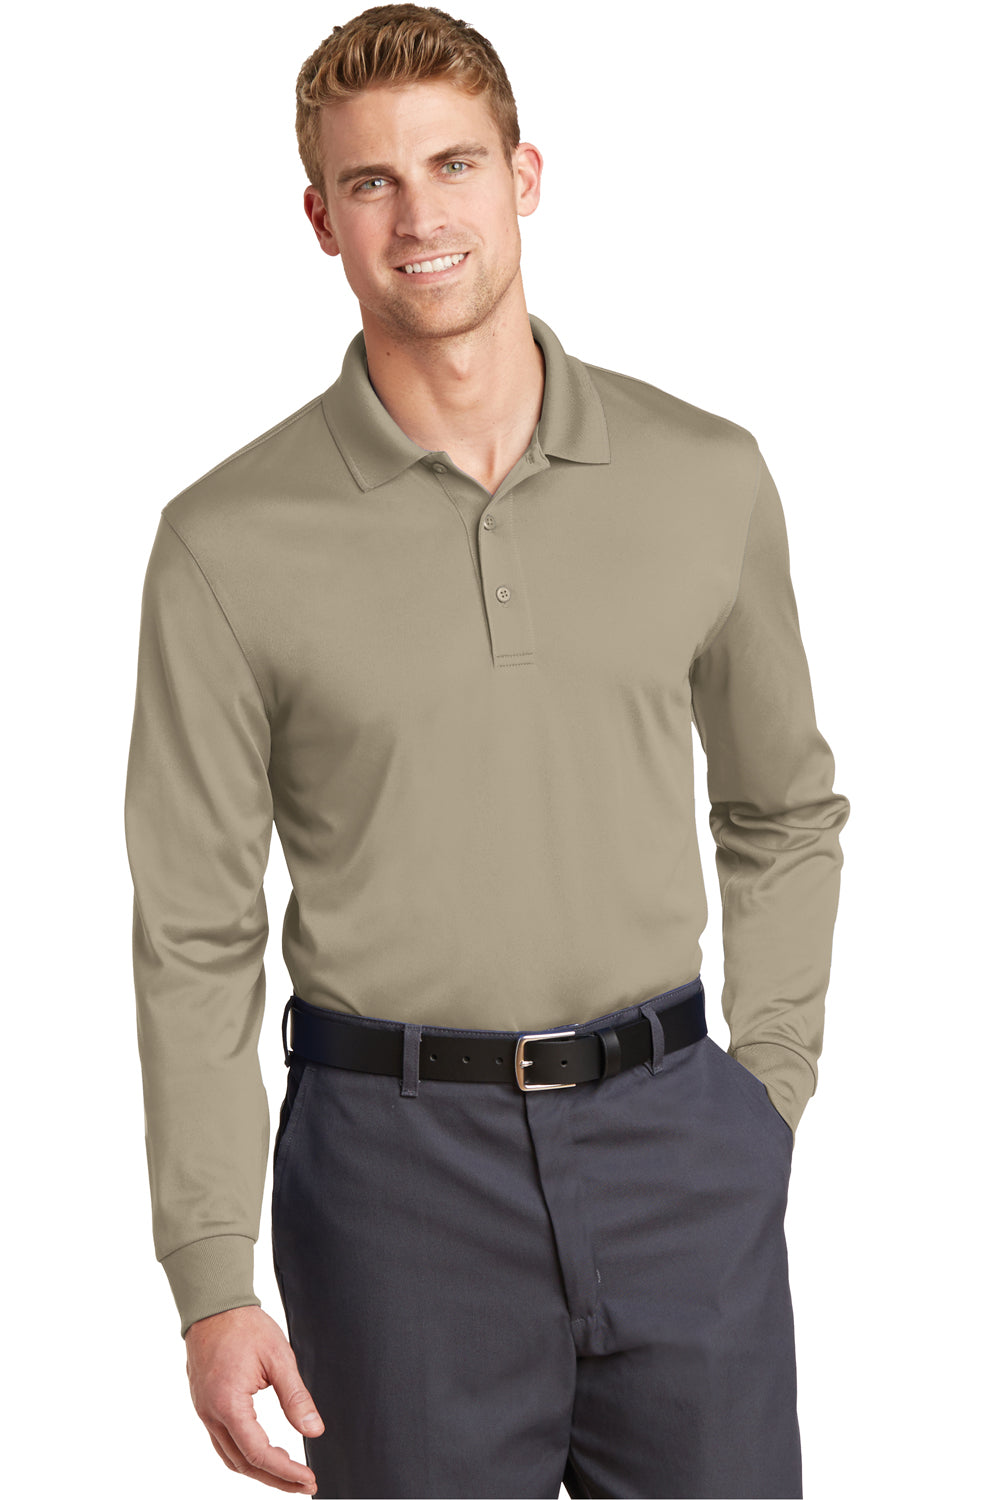 CornerStone CS412LS Mens Select Moisture Wicking Long Sleeve Polo Shirt Tan Brown Front